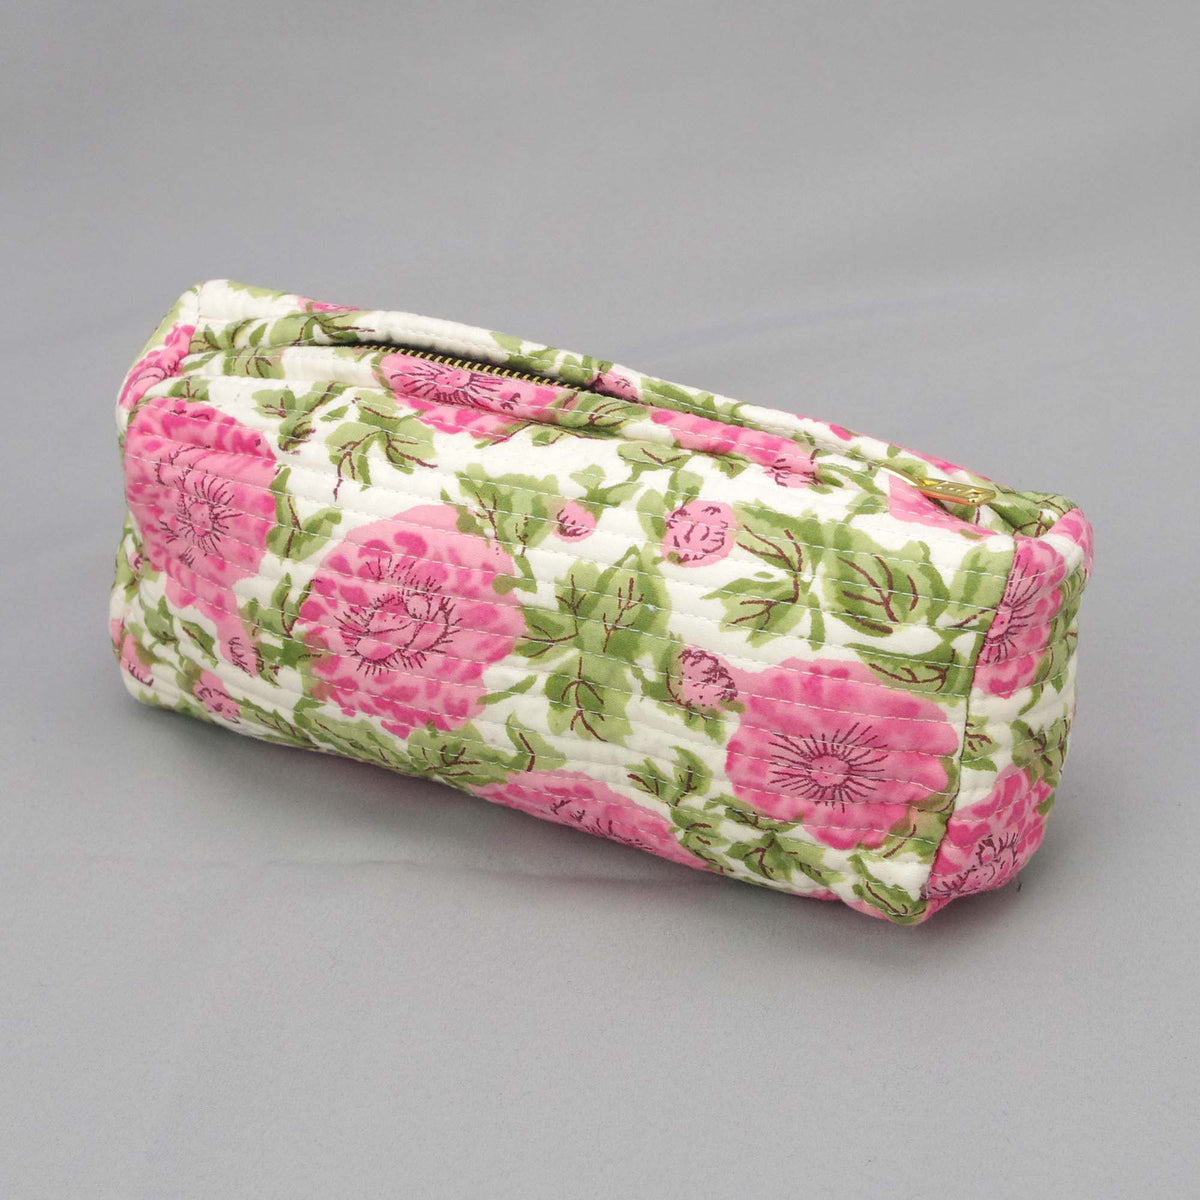 Block Print Makeup Pouch or Pencil Case- Pink Floral